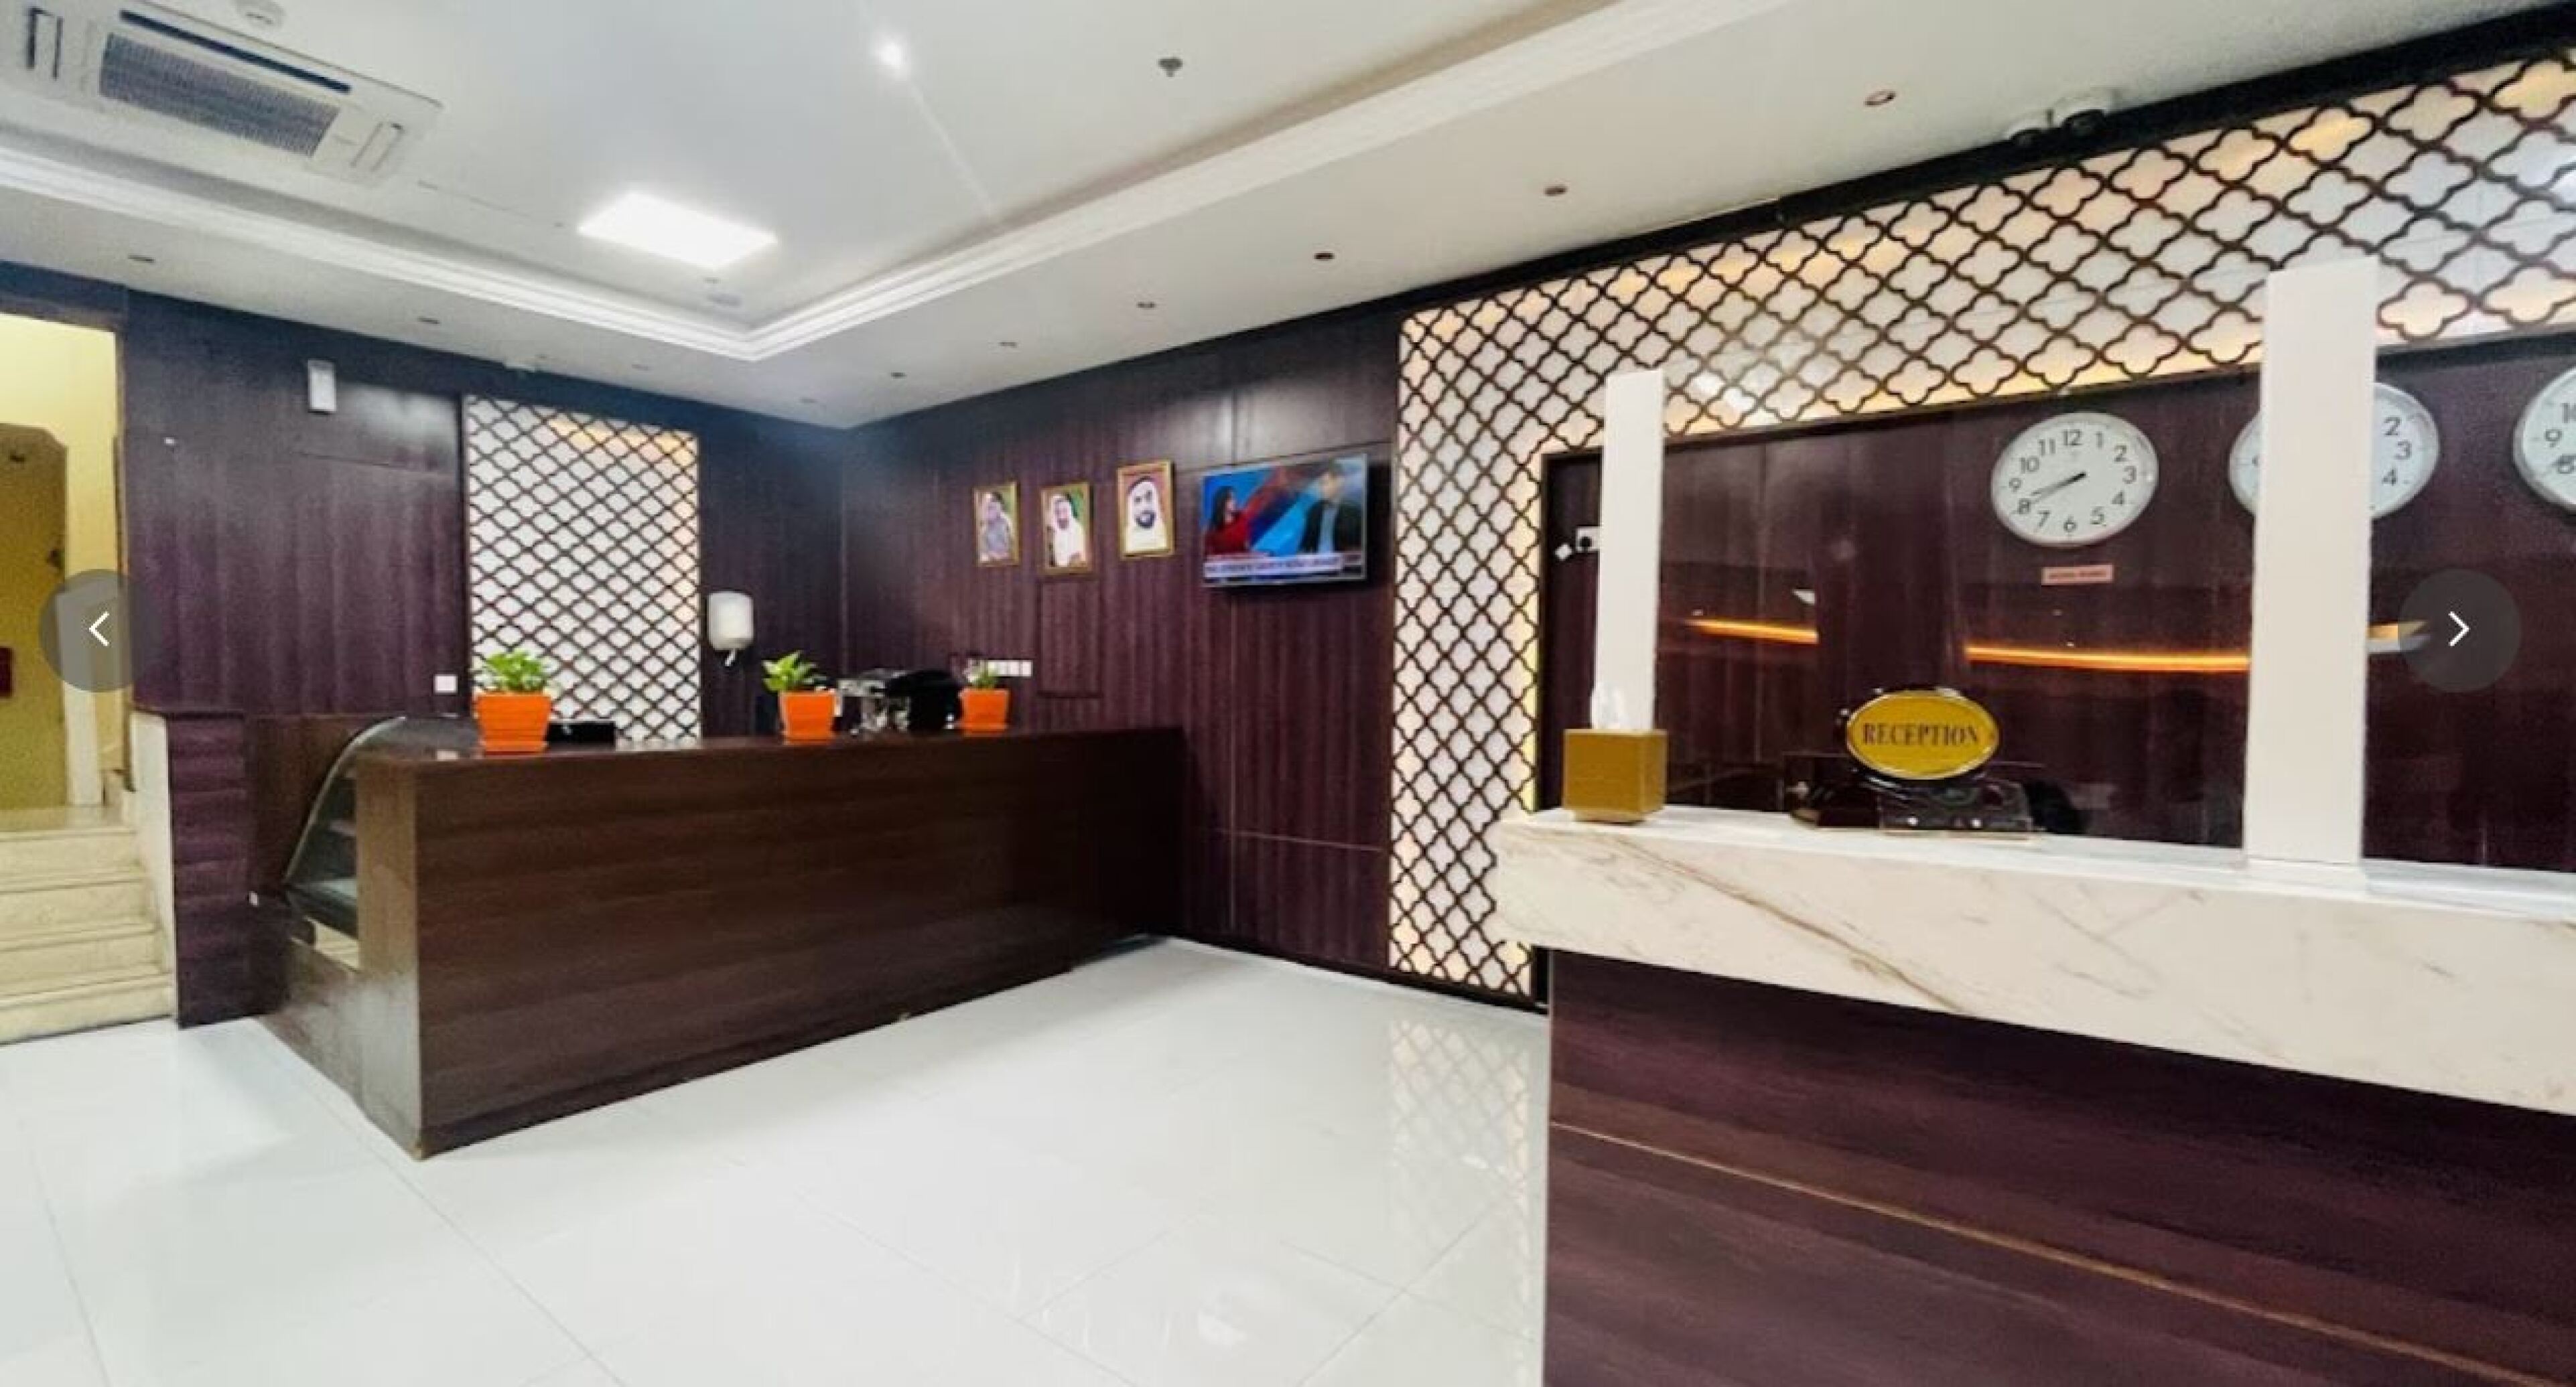  امکانات هتل رویال تولیپ دبی 